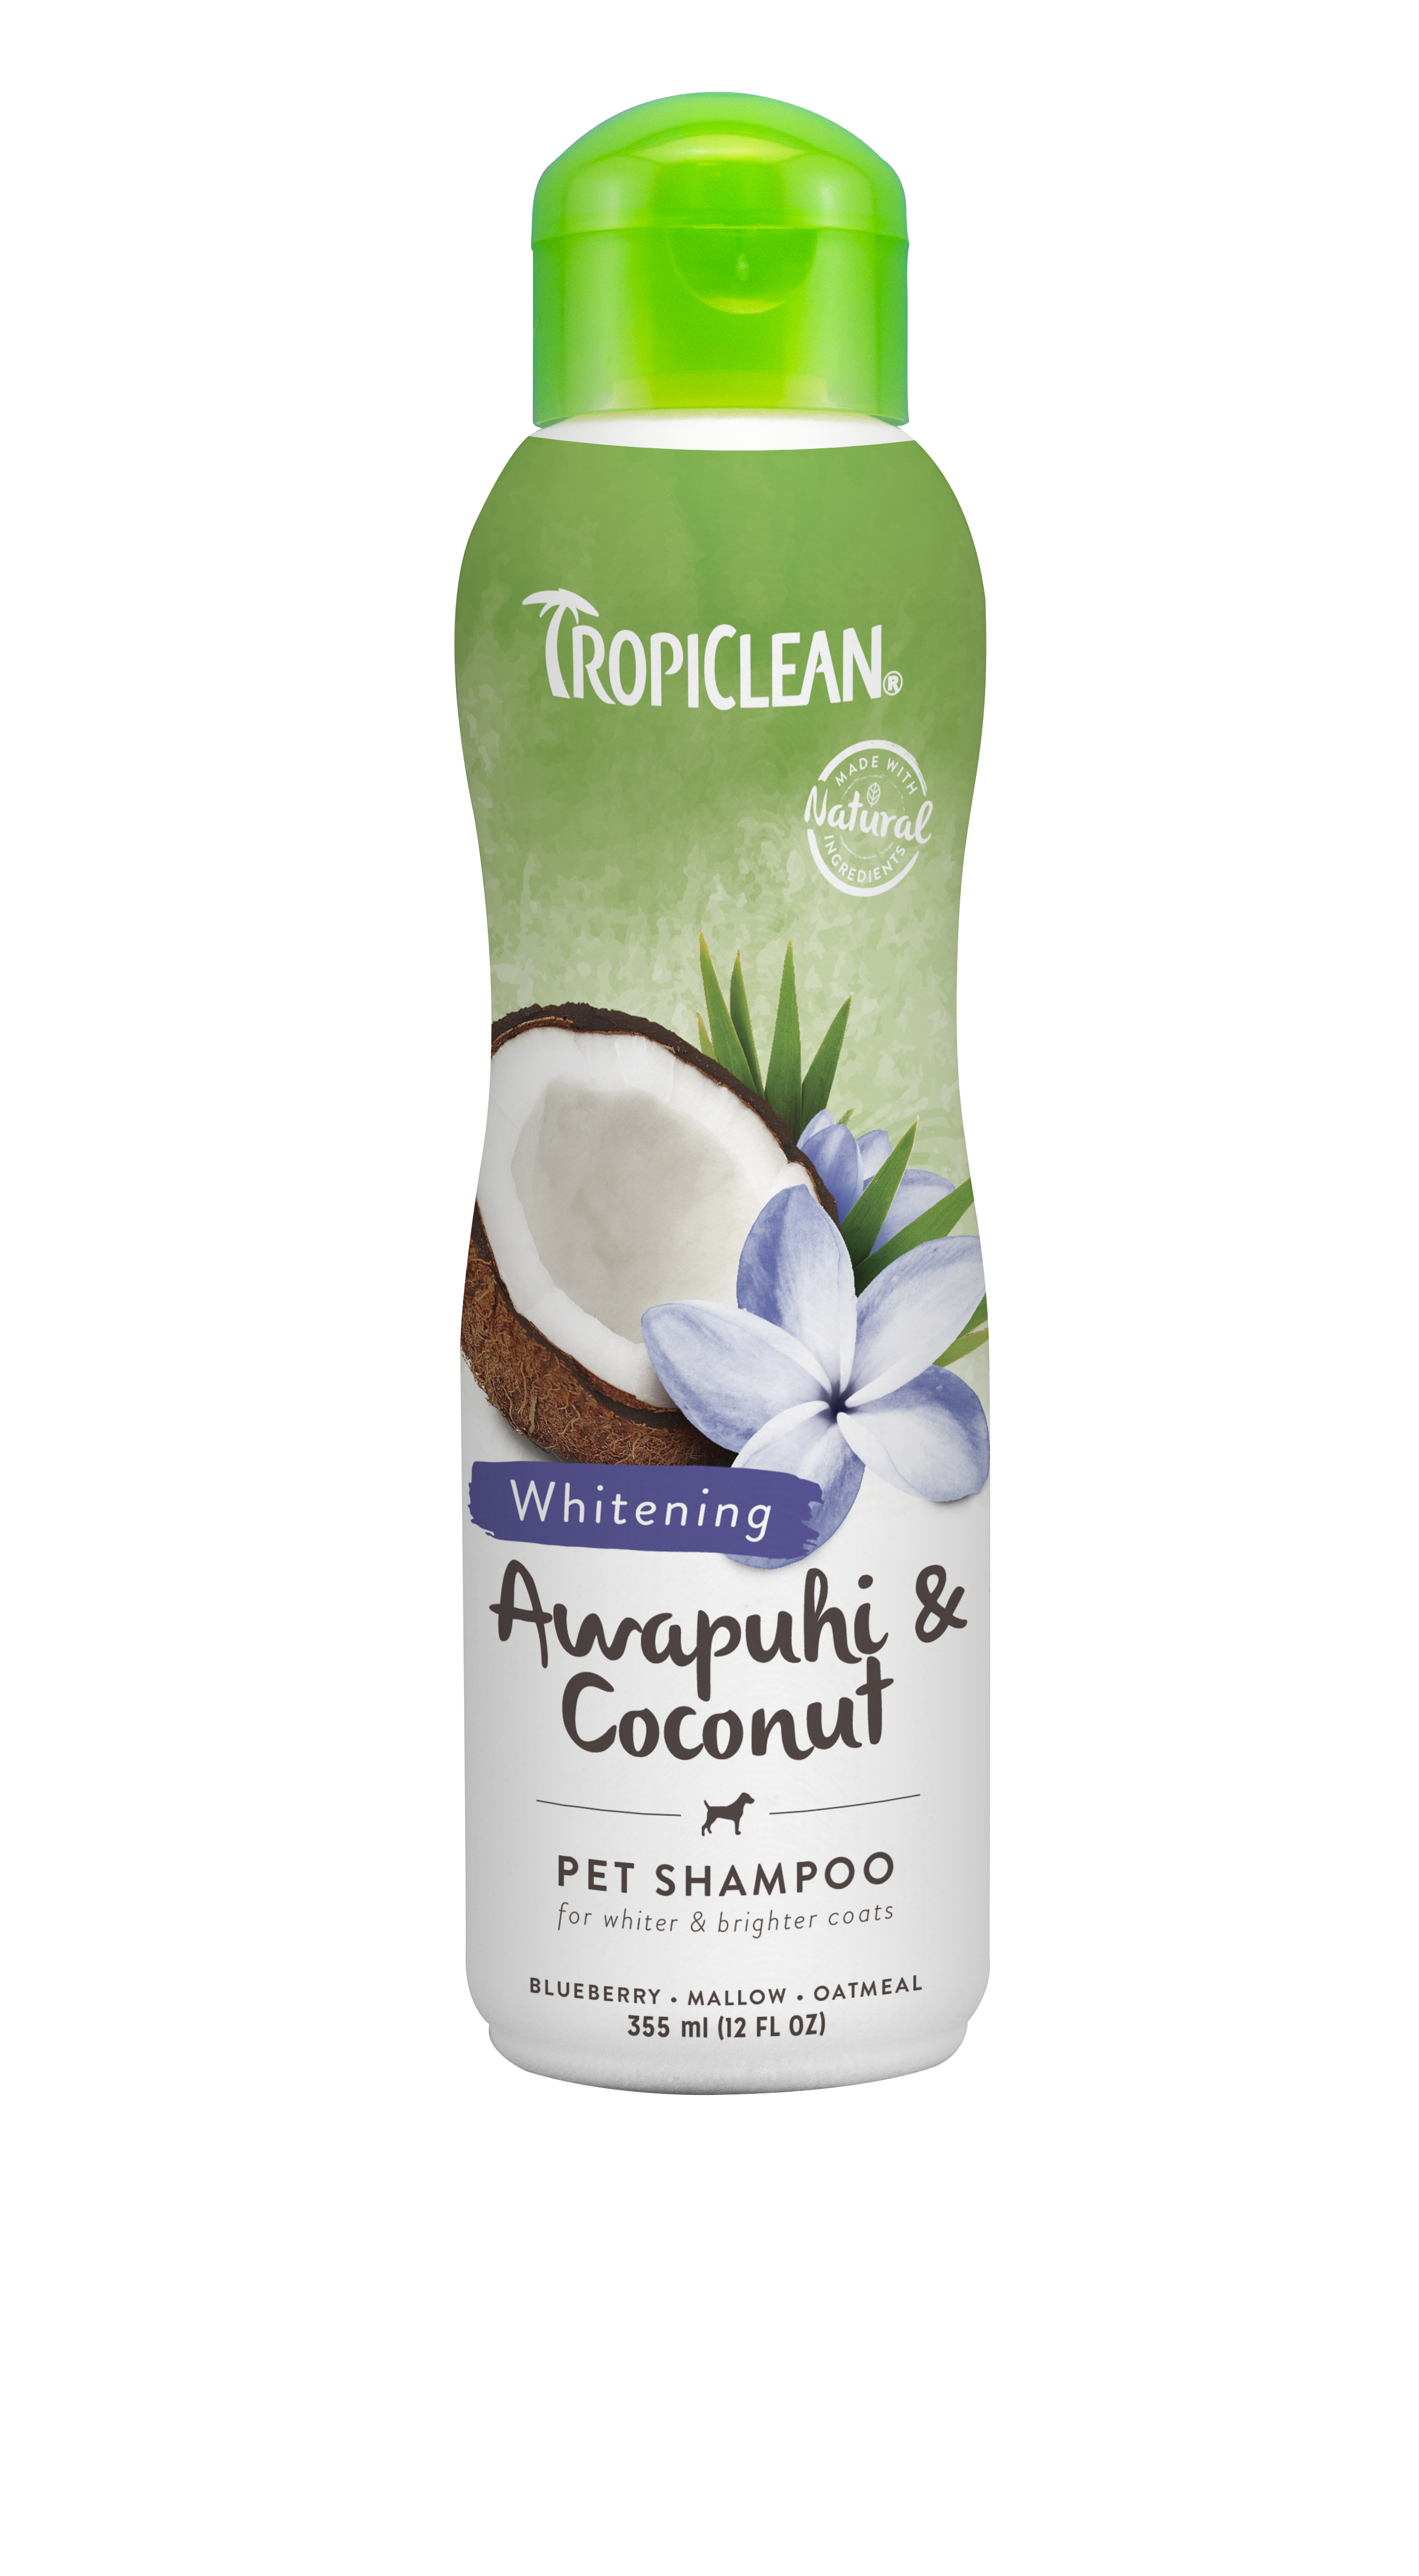 Tropiclean Awapuhi and Coconut Shampoo (Whitening)